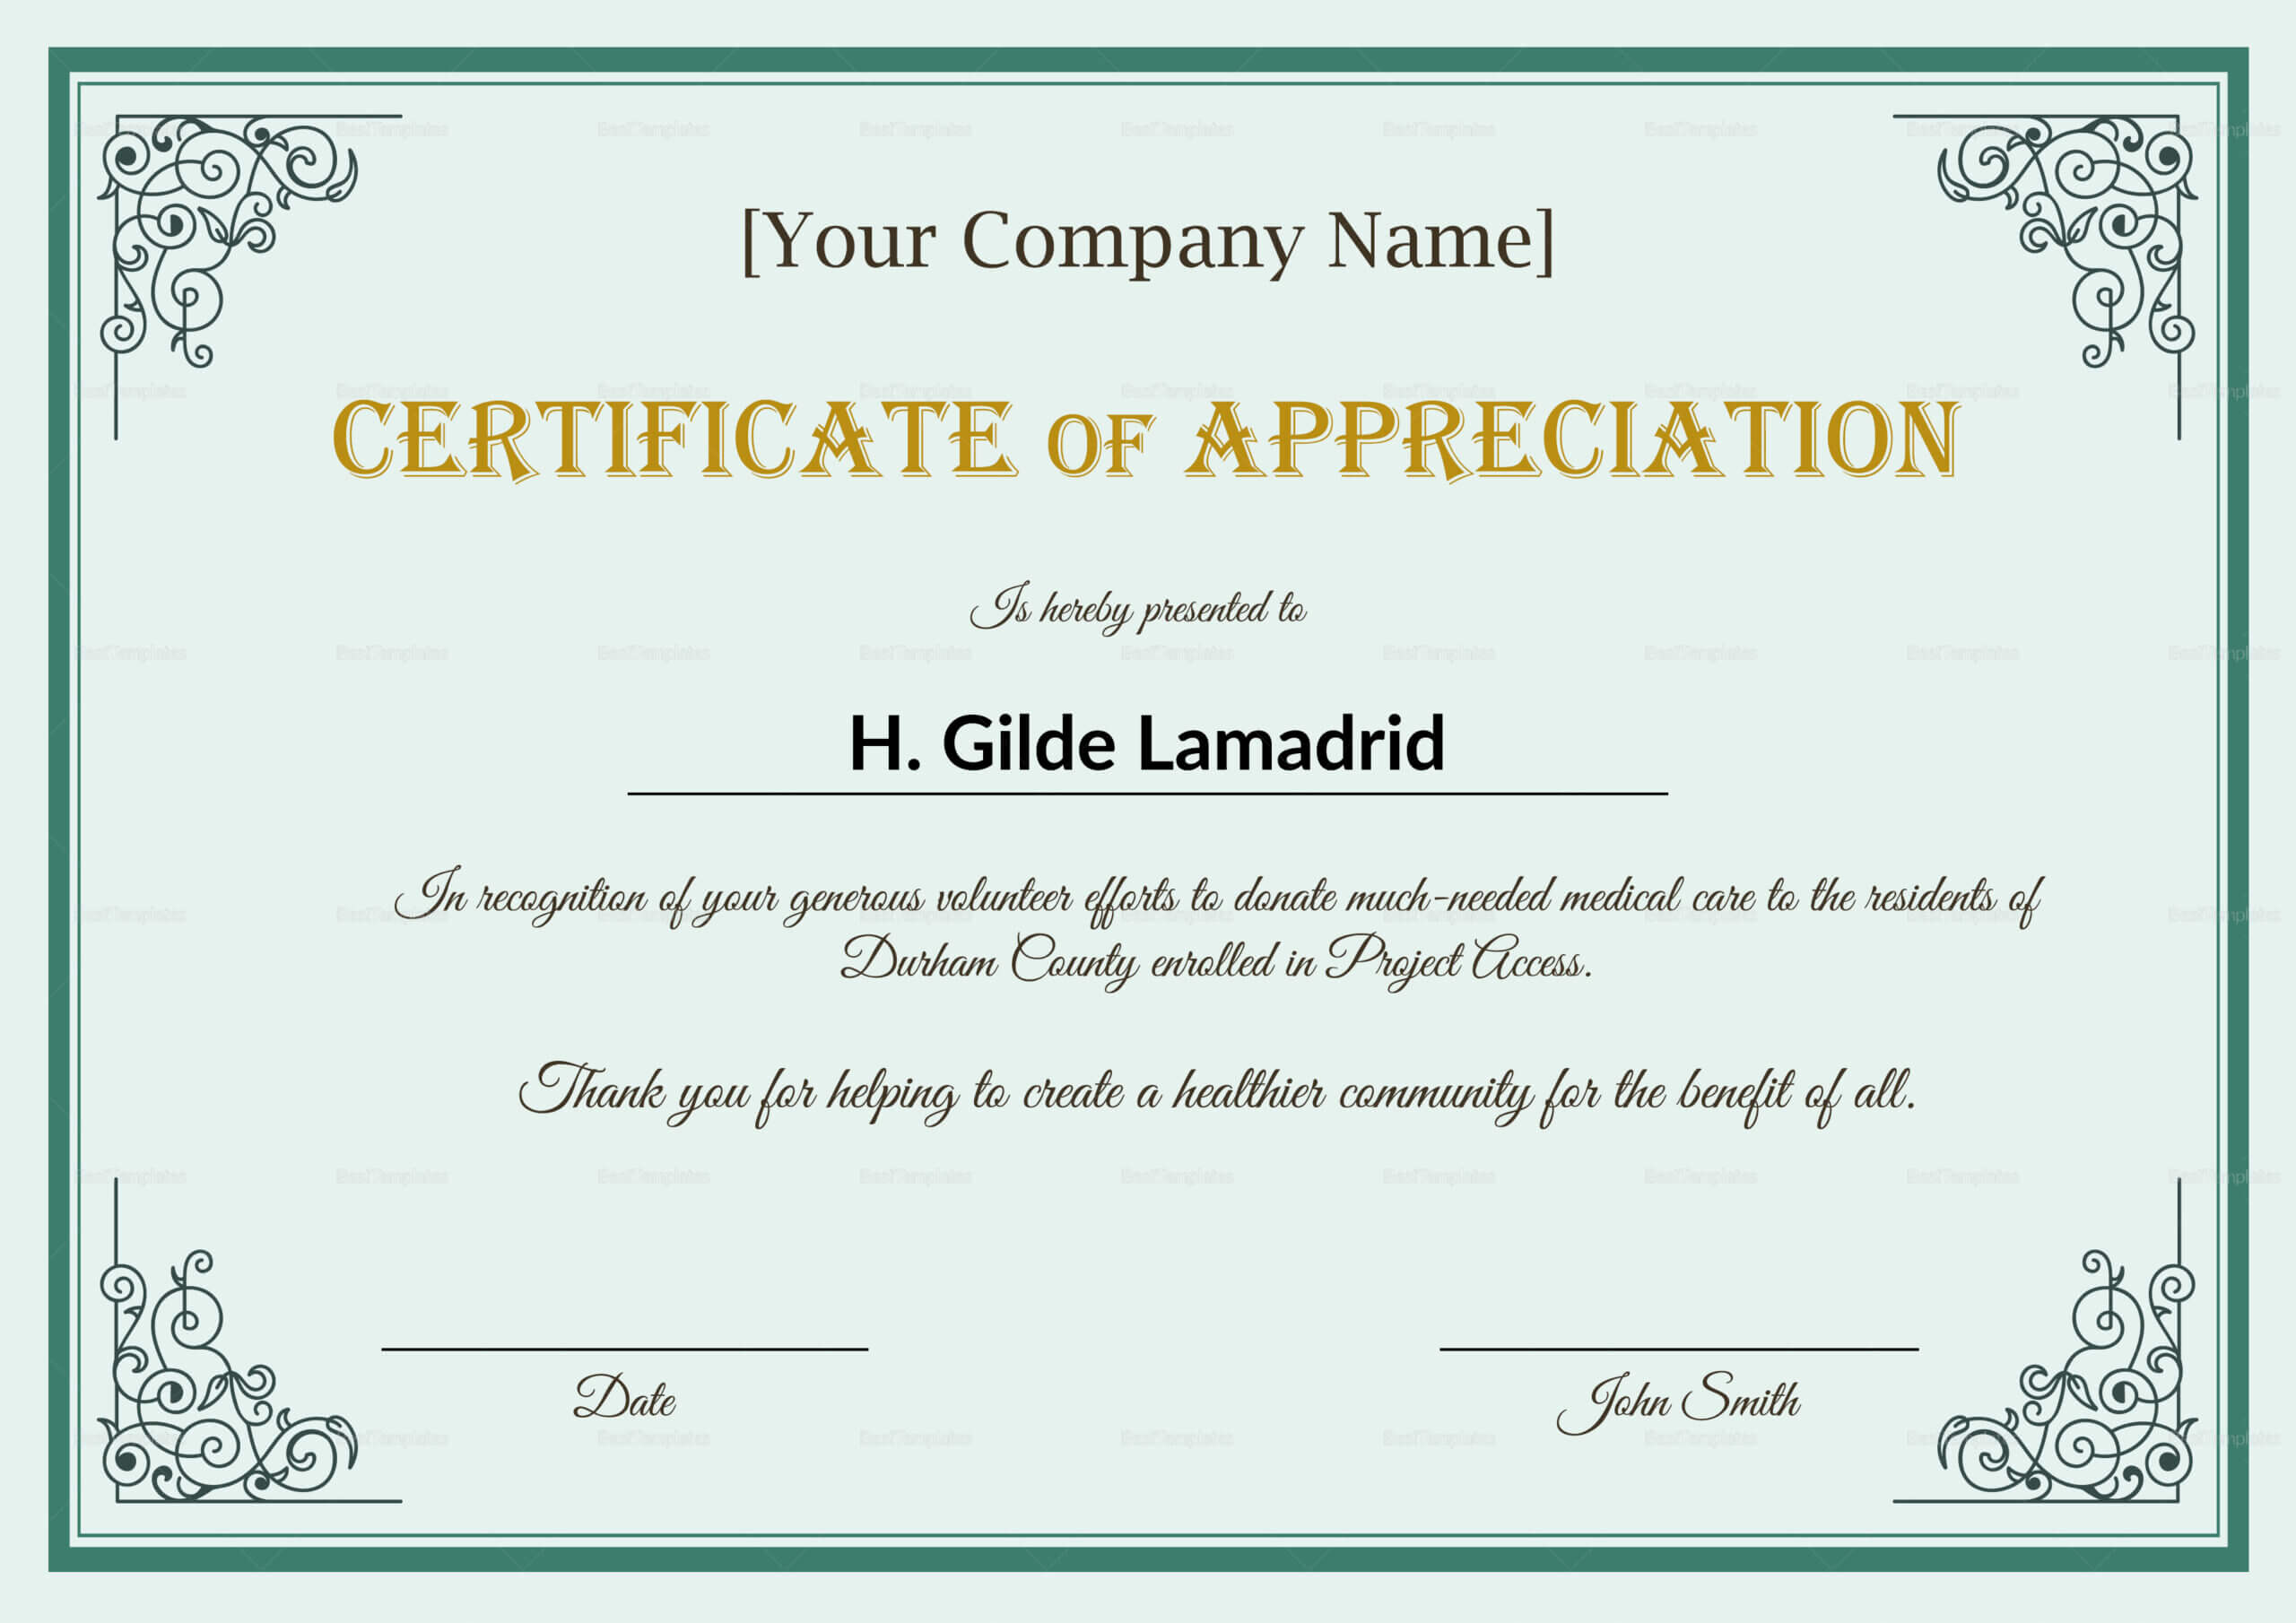 employee-recognition-certificates-templates-calep-regarding-best-employee-award-certificate